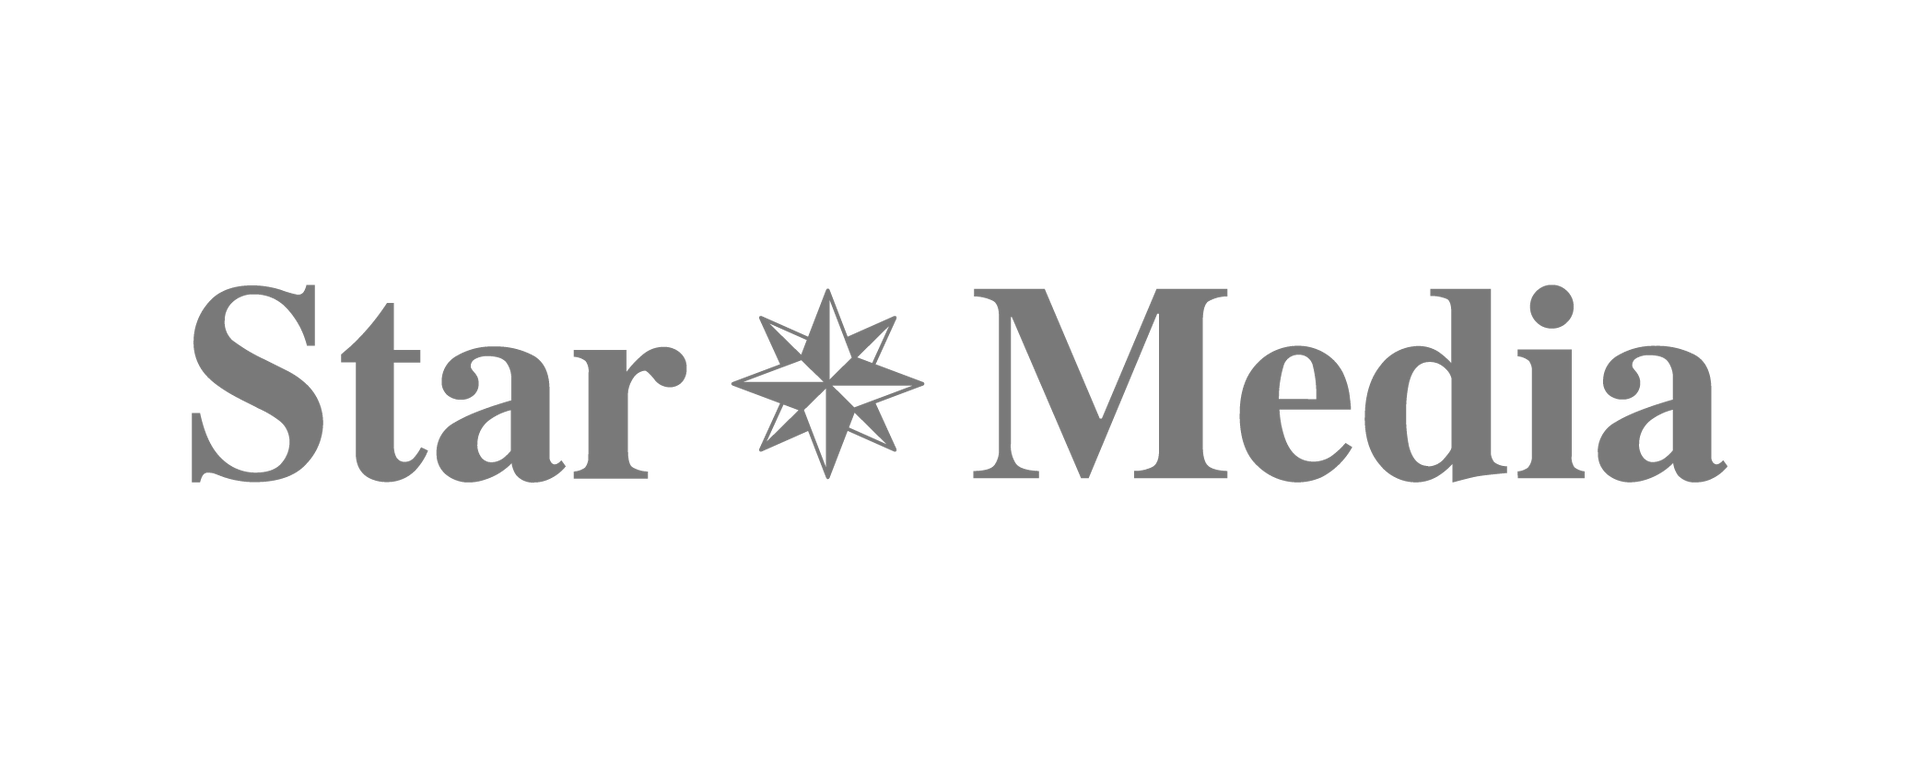 a black and white logo for star media